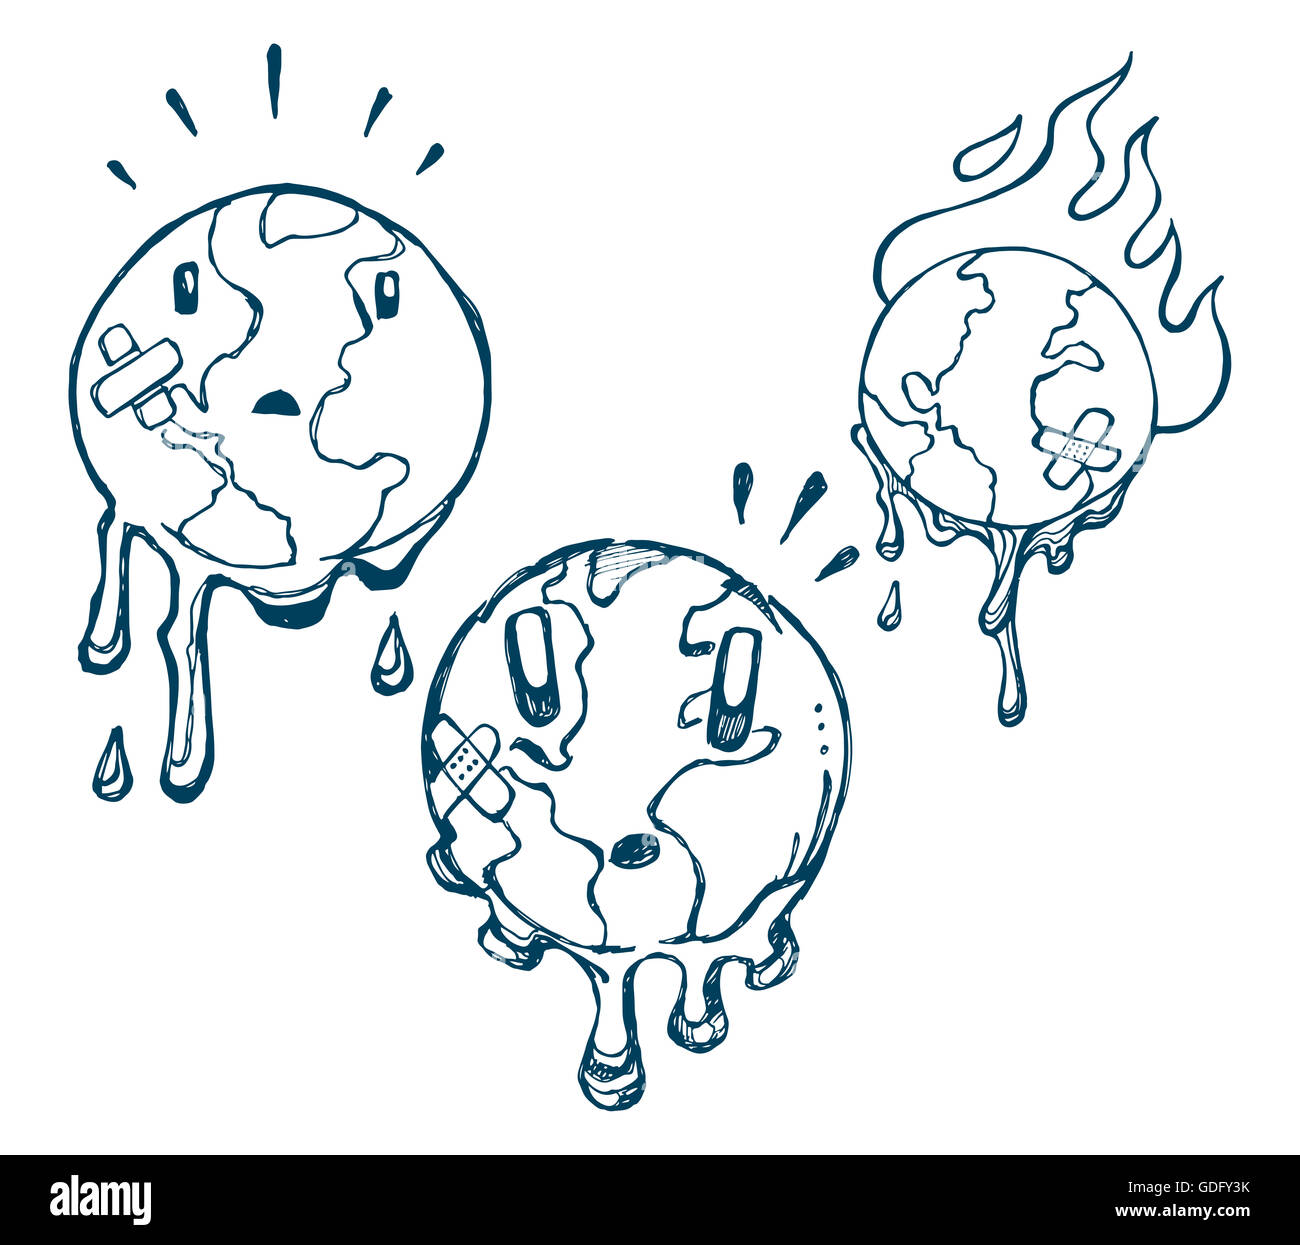 Planeta tierra dibujo Imágenes recortadas de stock - Alamy